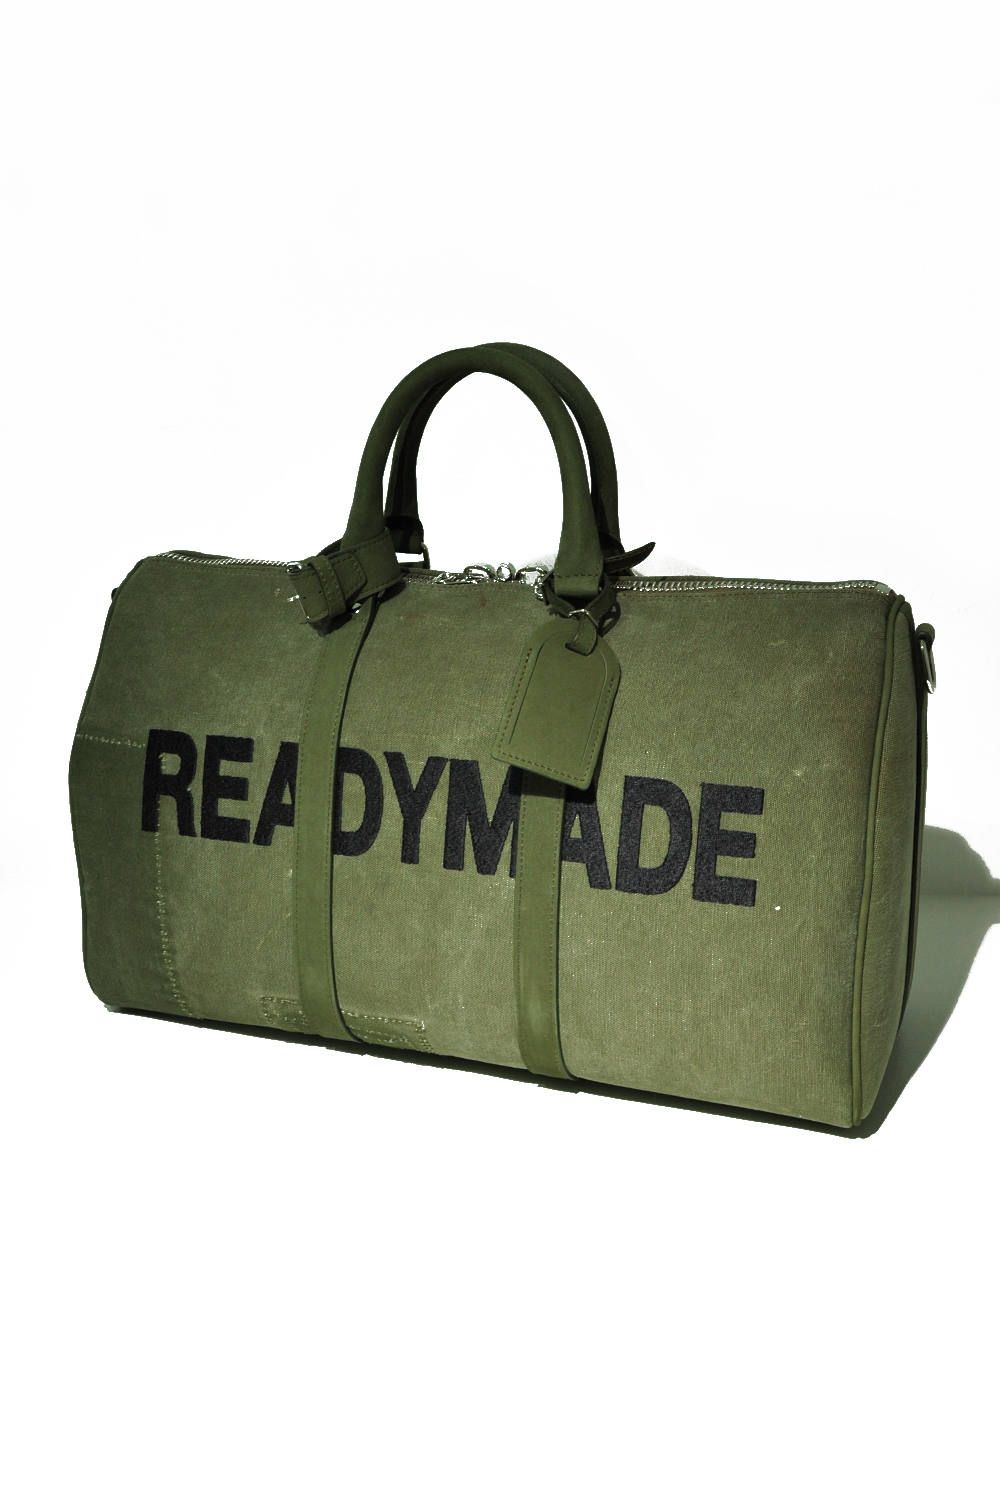 READYMADE - Over Night Bag(M) | laid-back